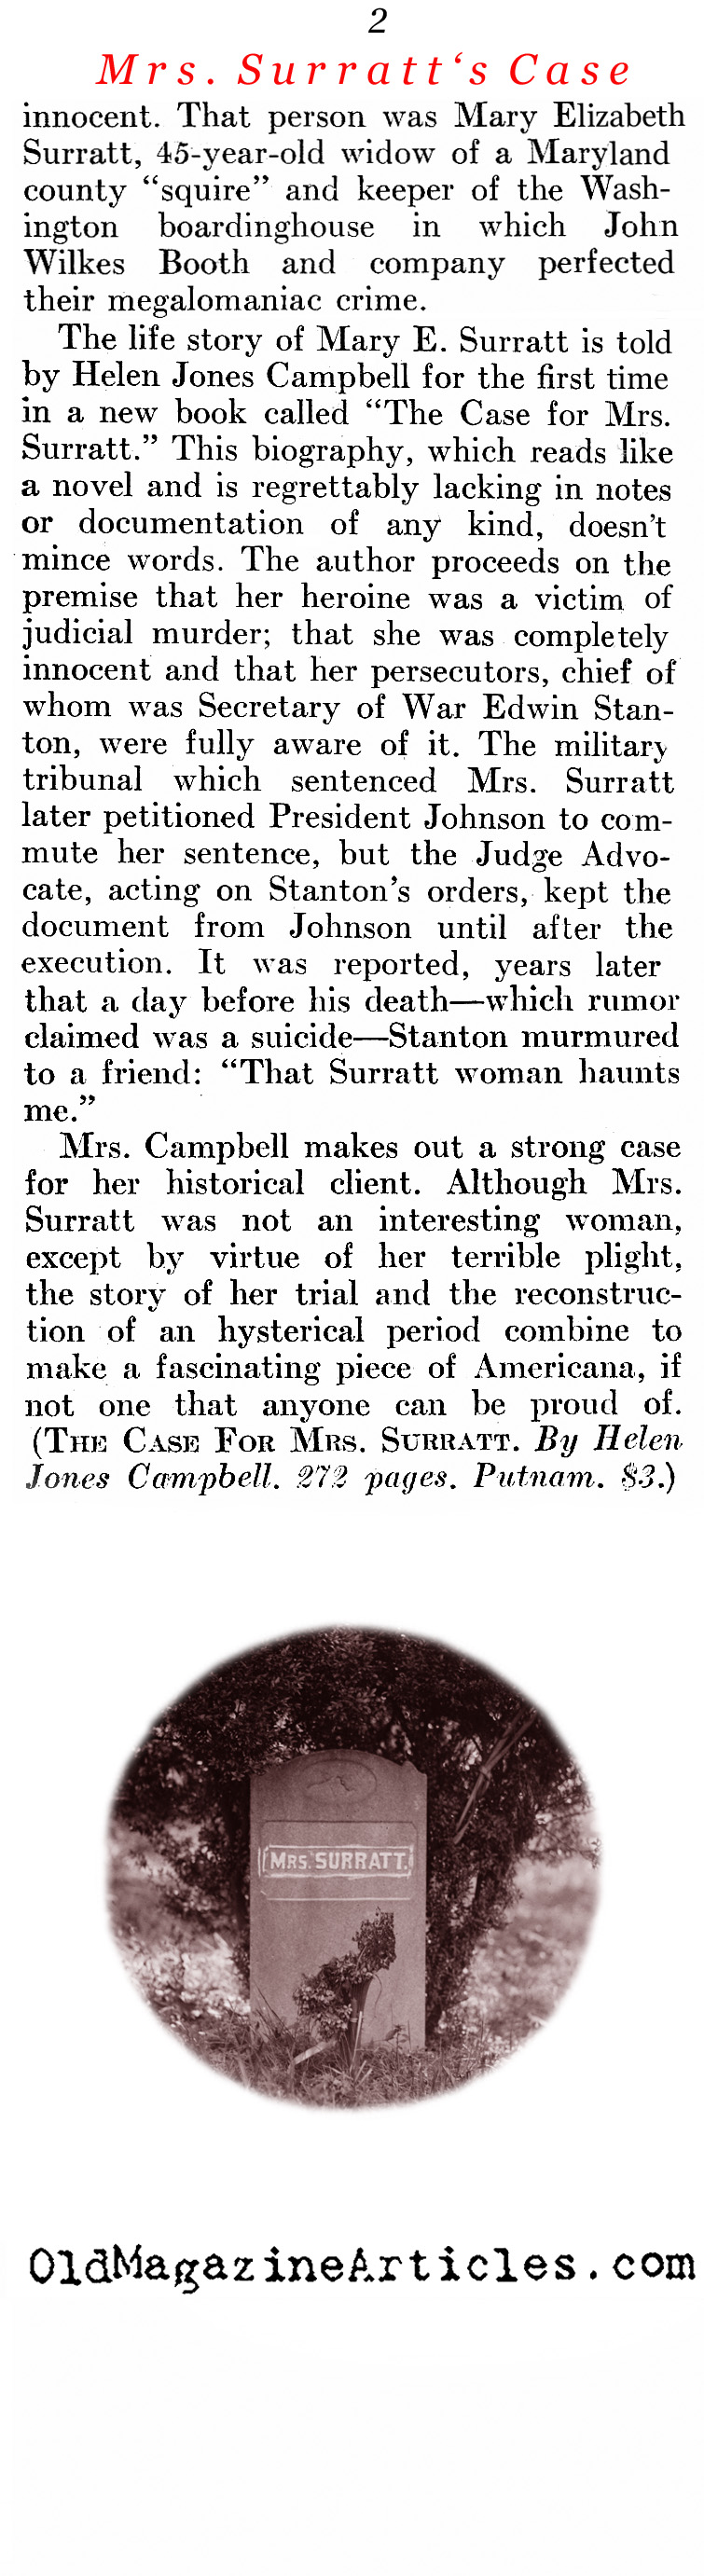 Was Mrs. Surratt Innocent? (Newsweek Magazine, 1943)